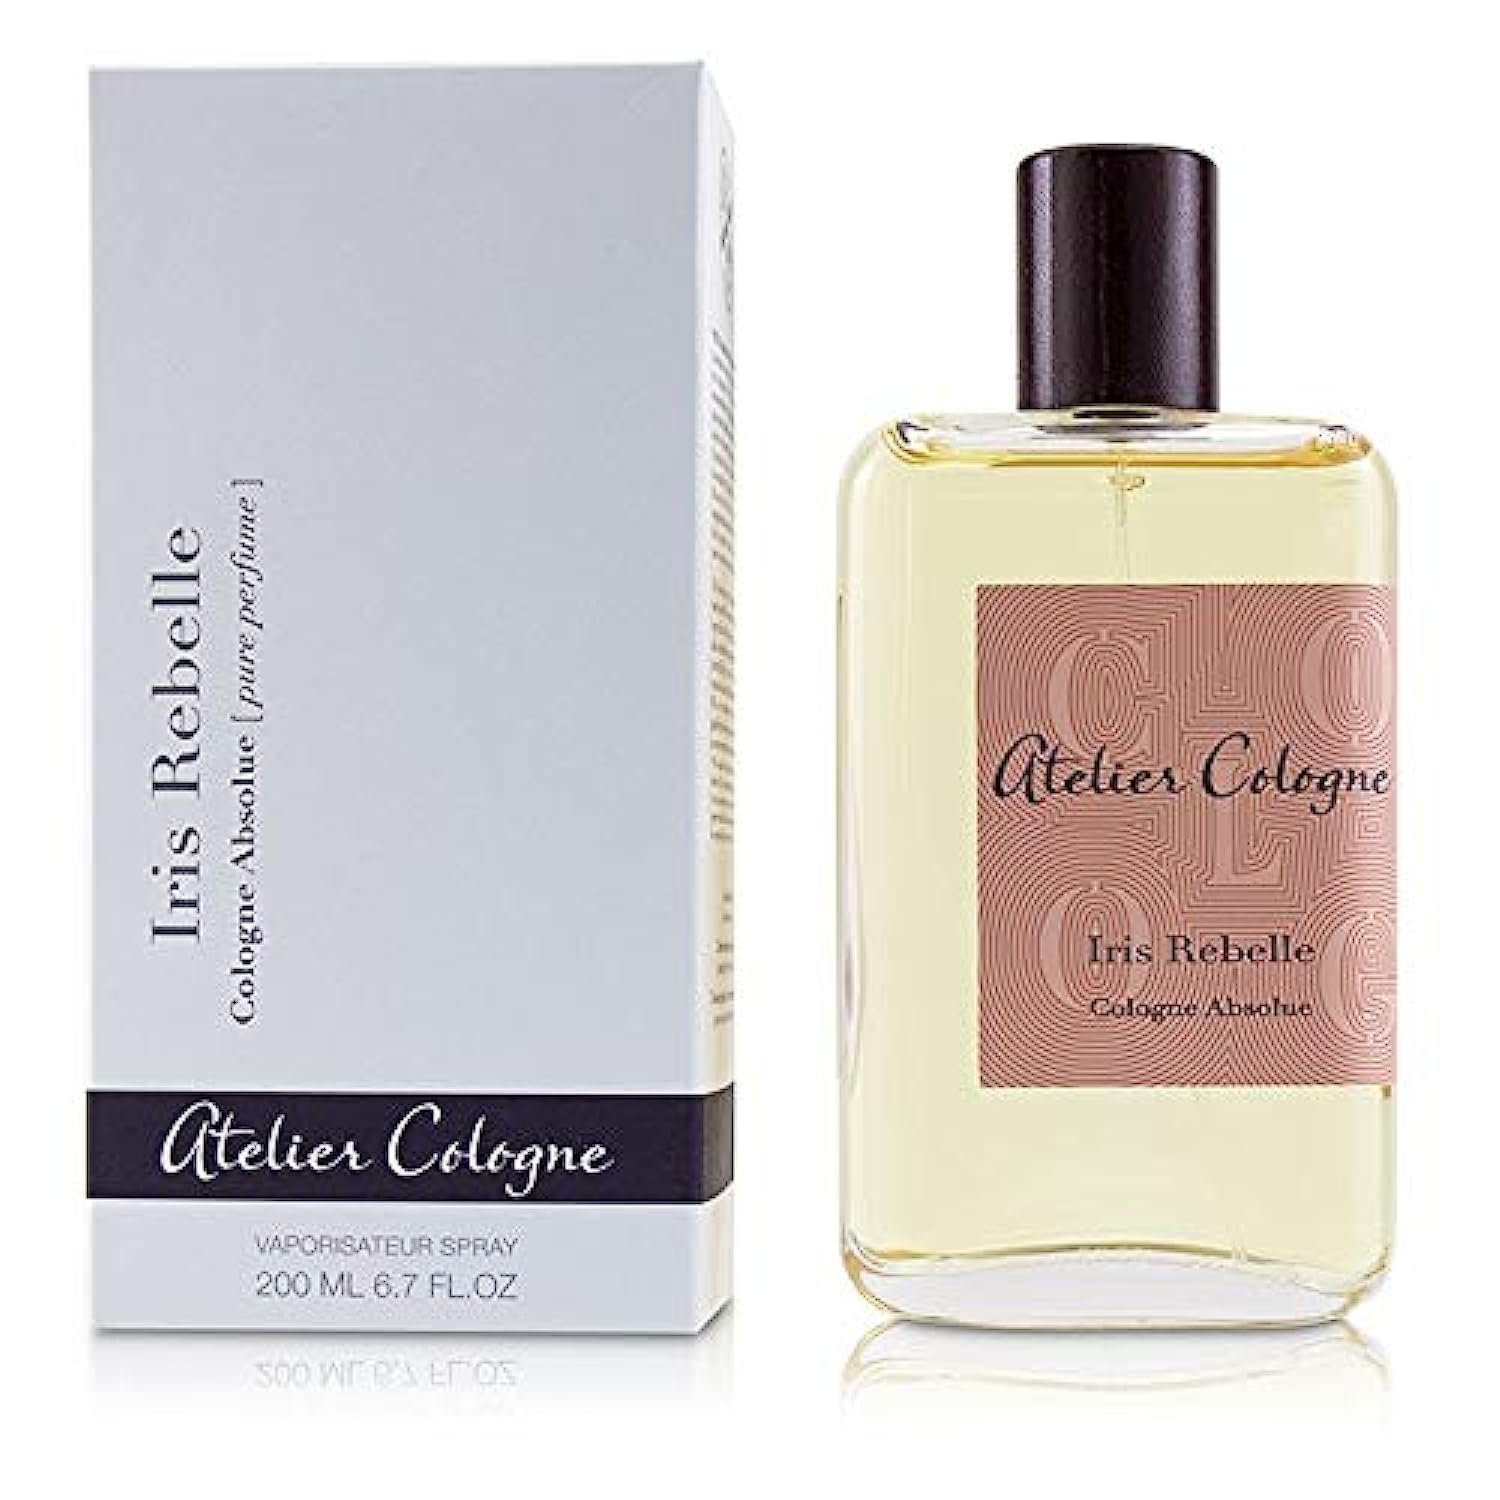 Atelier Cologne Iris Rebelle Cologne Absolue | My Perfume Shop Australia